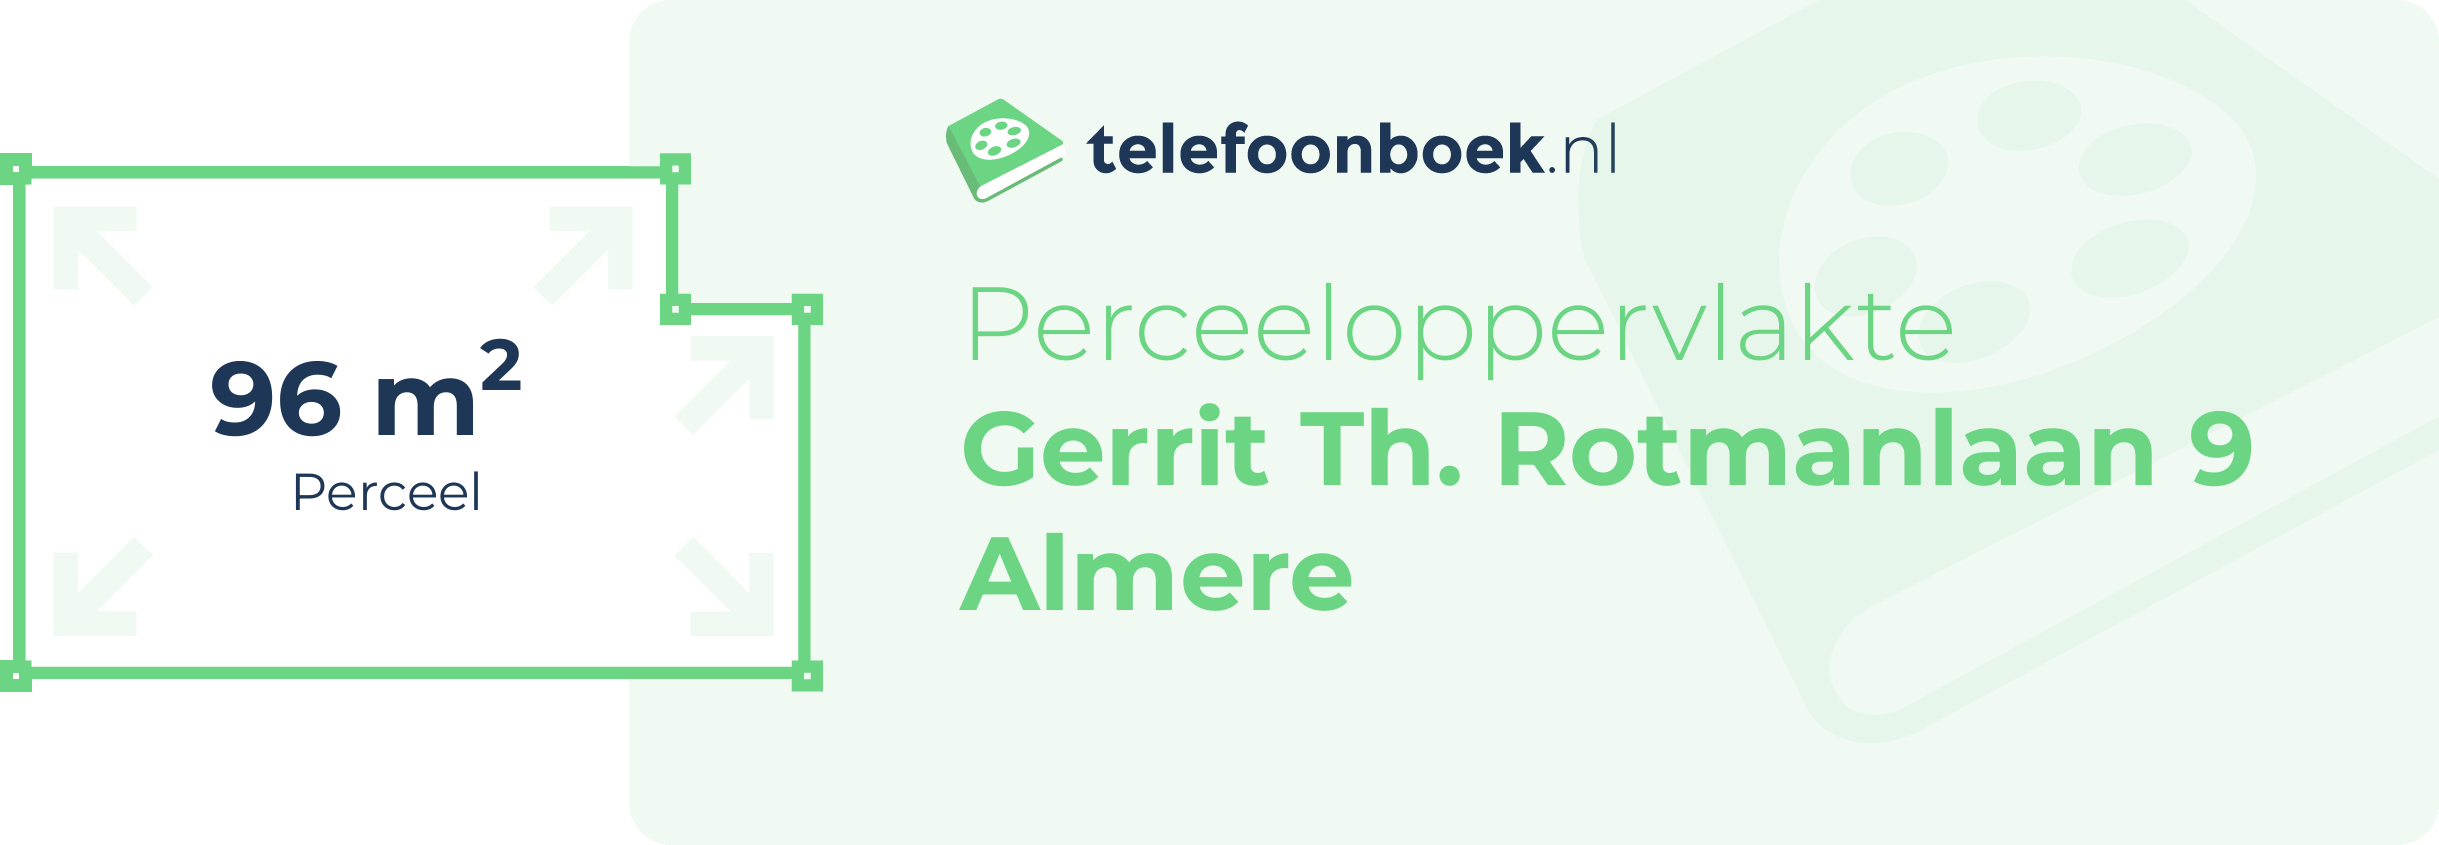 Perceeloppervlakte Gerrit Th. Rotmanlaan 9 Almere